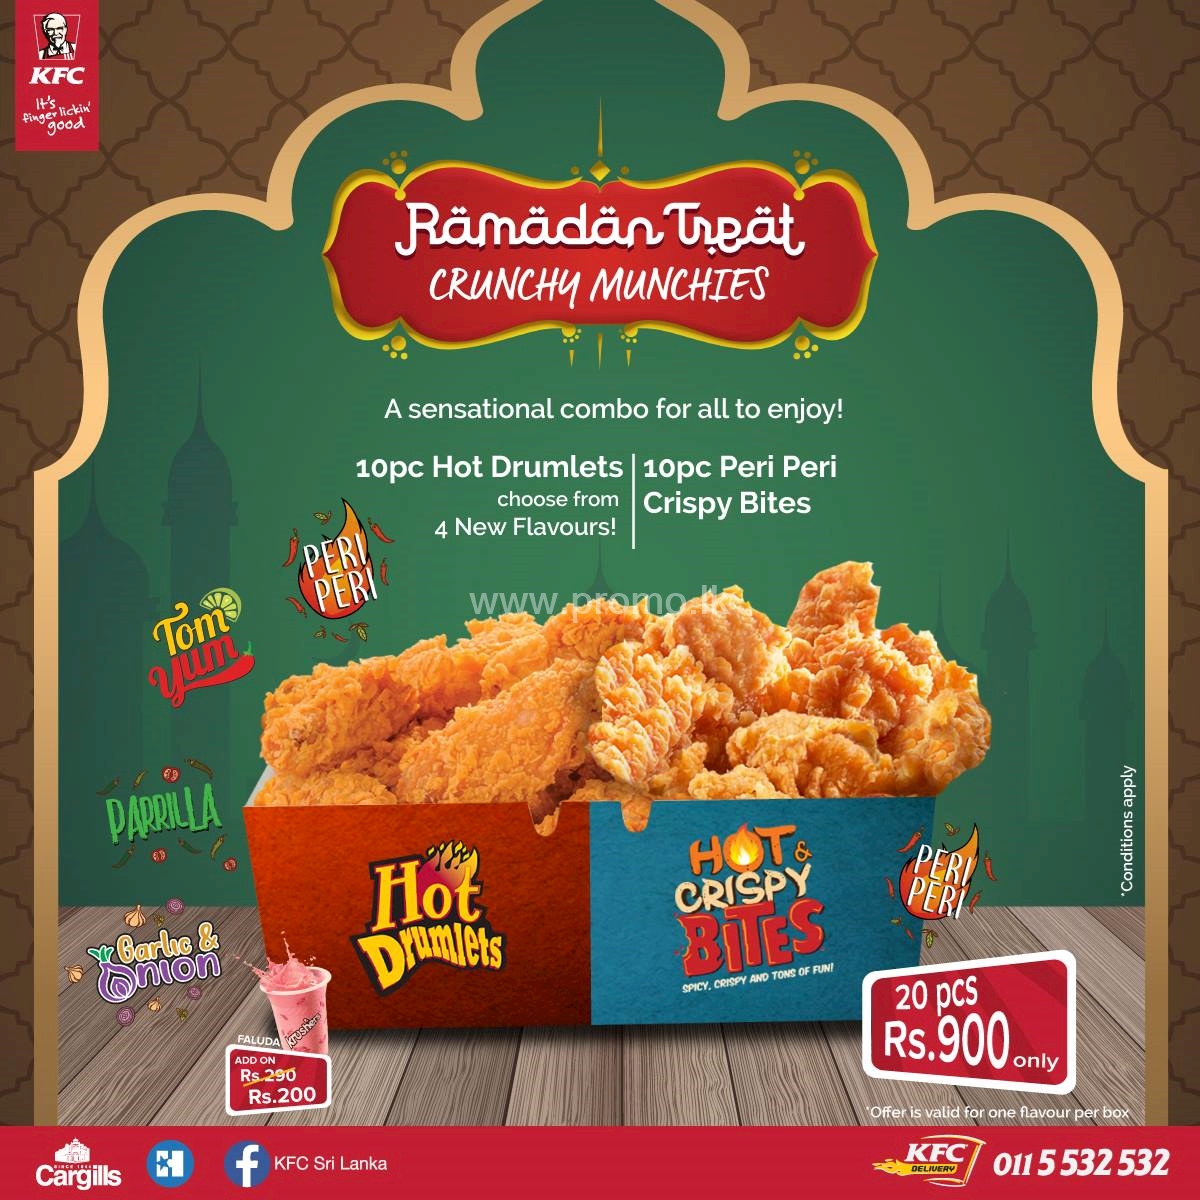 A Ramadan Treat Of Crunchy Munchies From Kfc